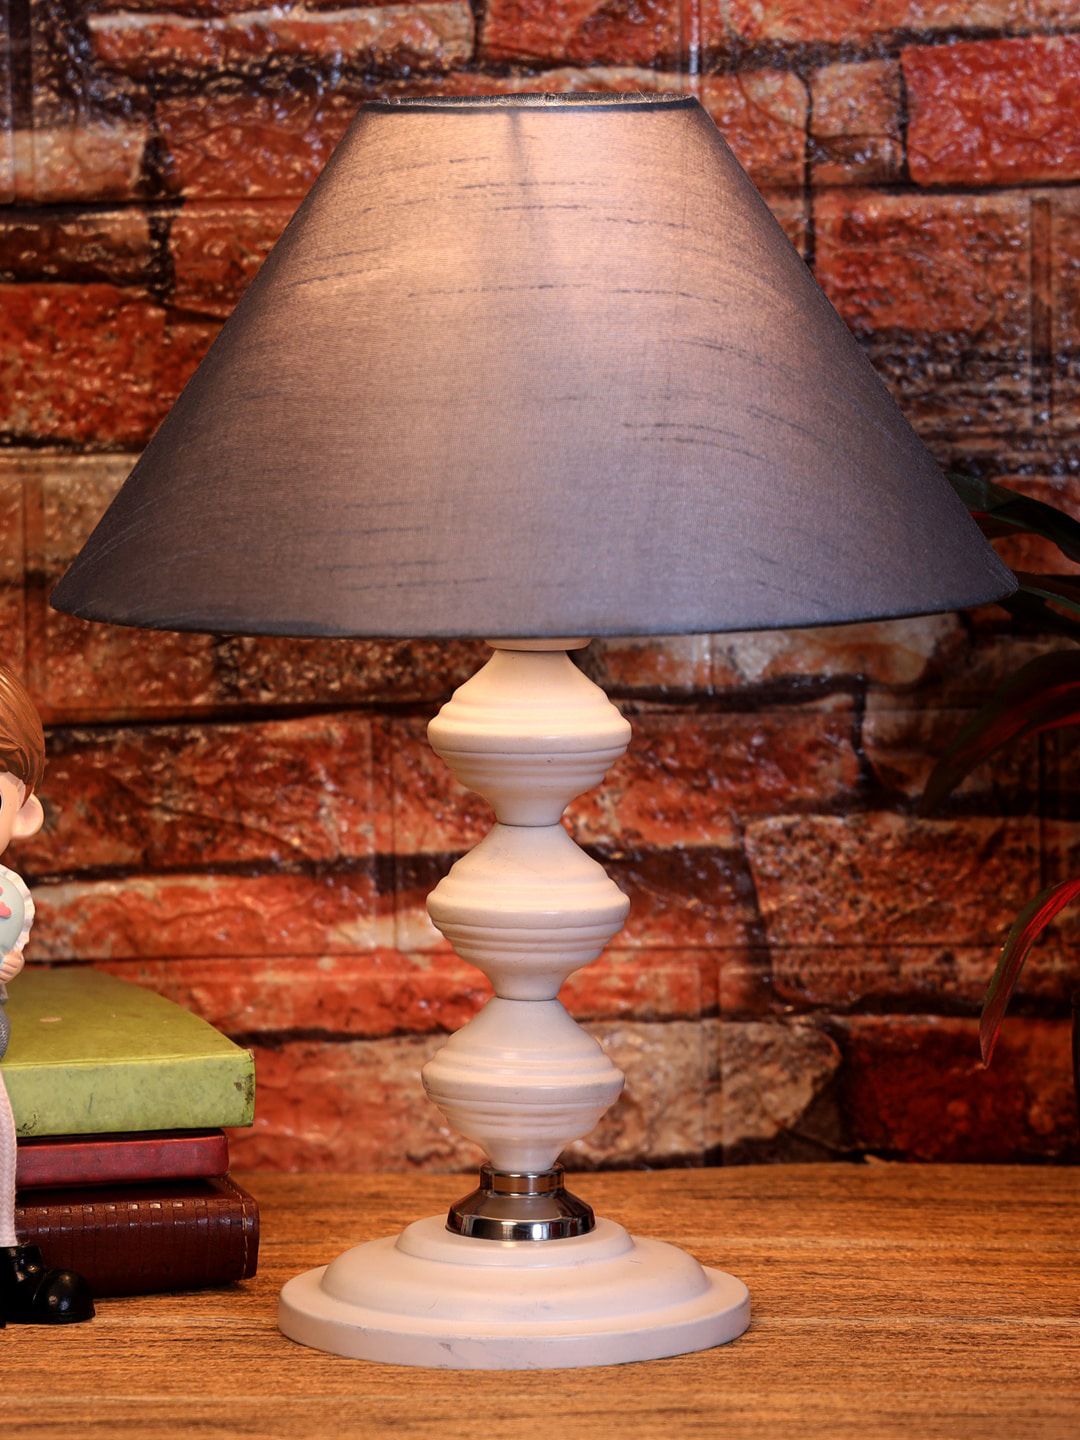 foziq White Solid Table Lamp Price in India